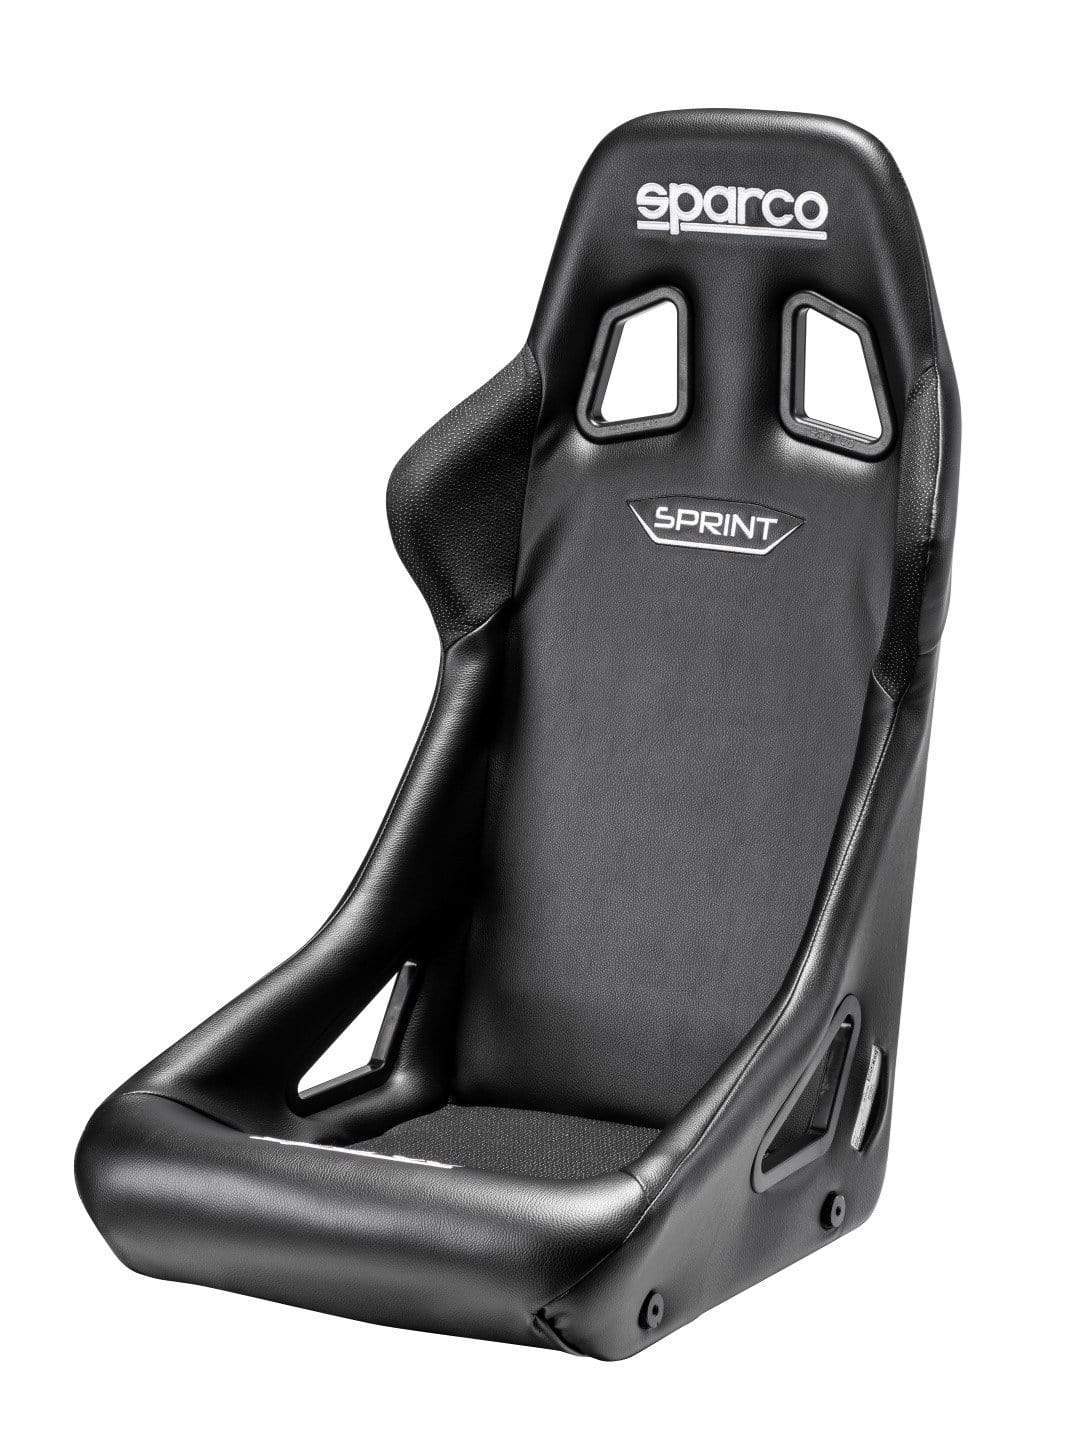 Sparco Seat Sprint Vinyl (Medium) Black - Universal - Dirty Racing Products